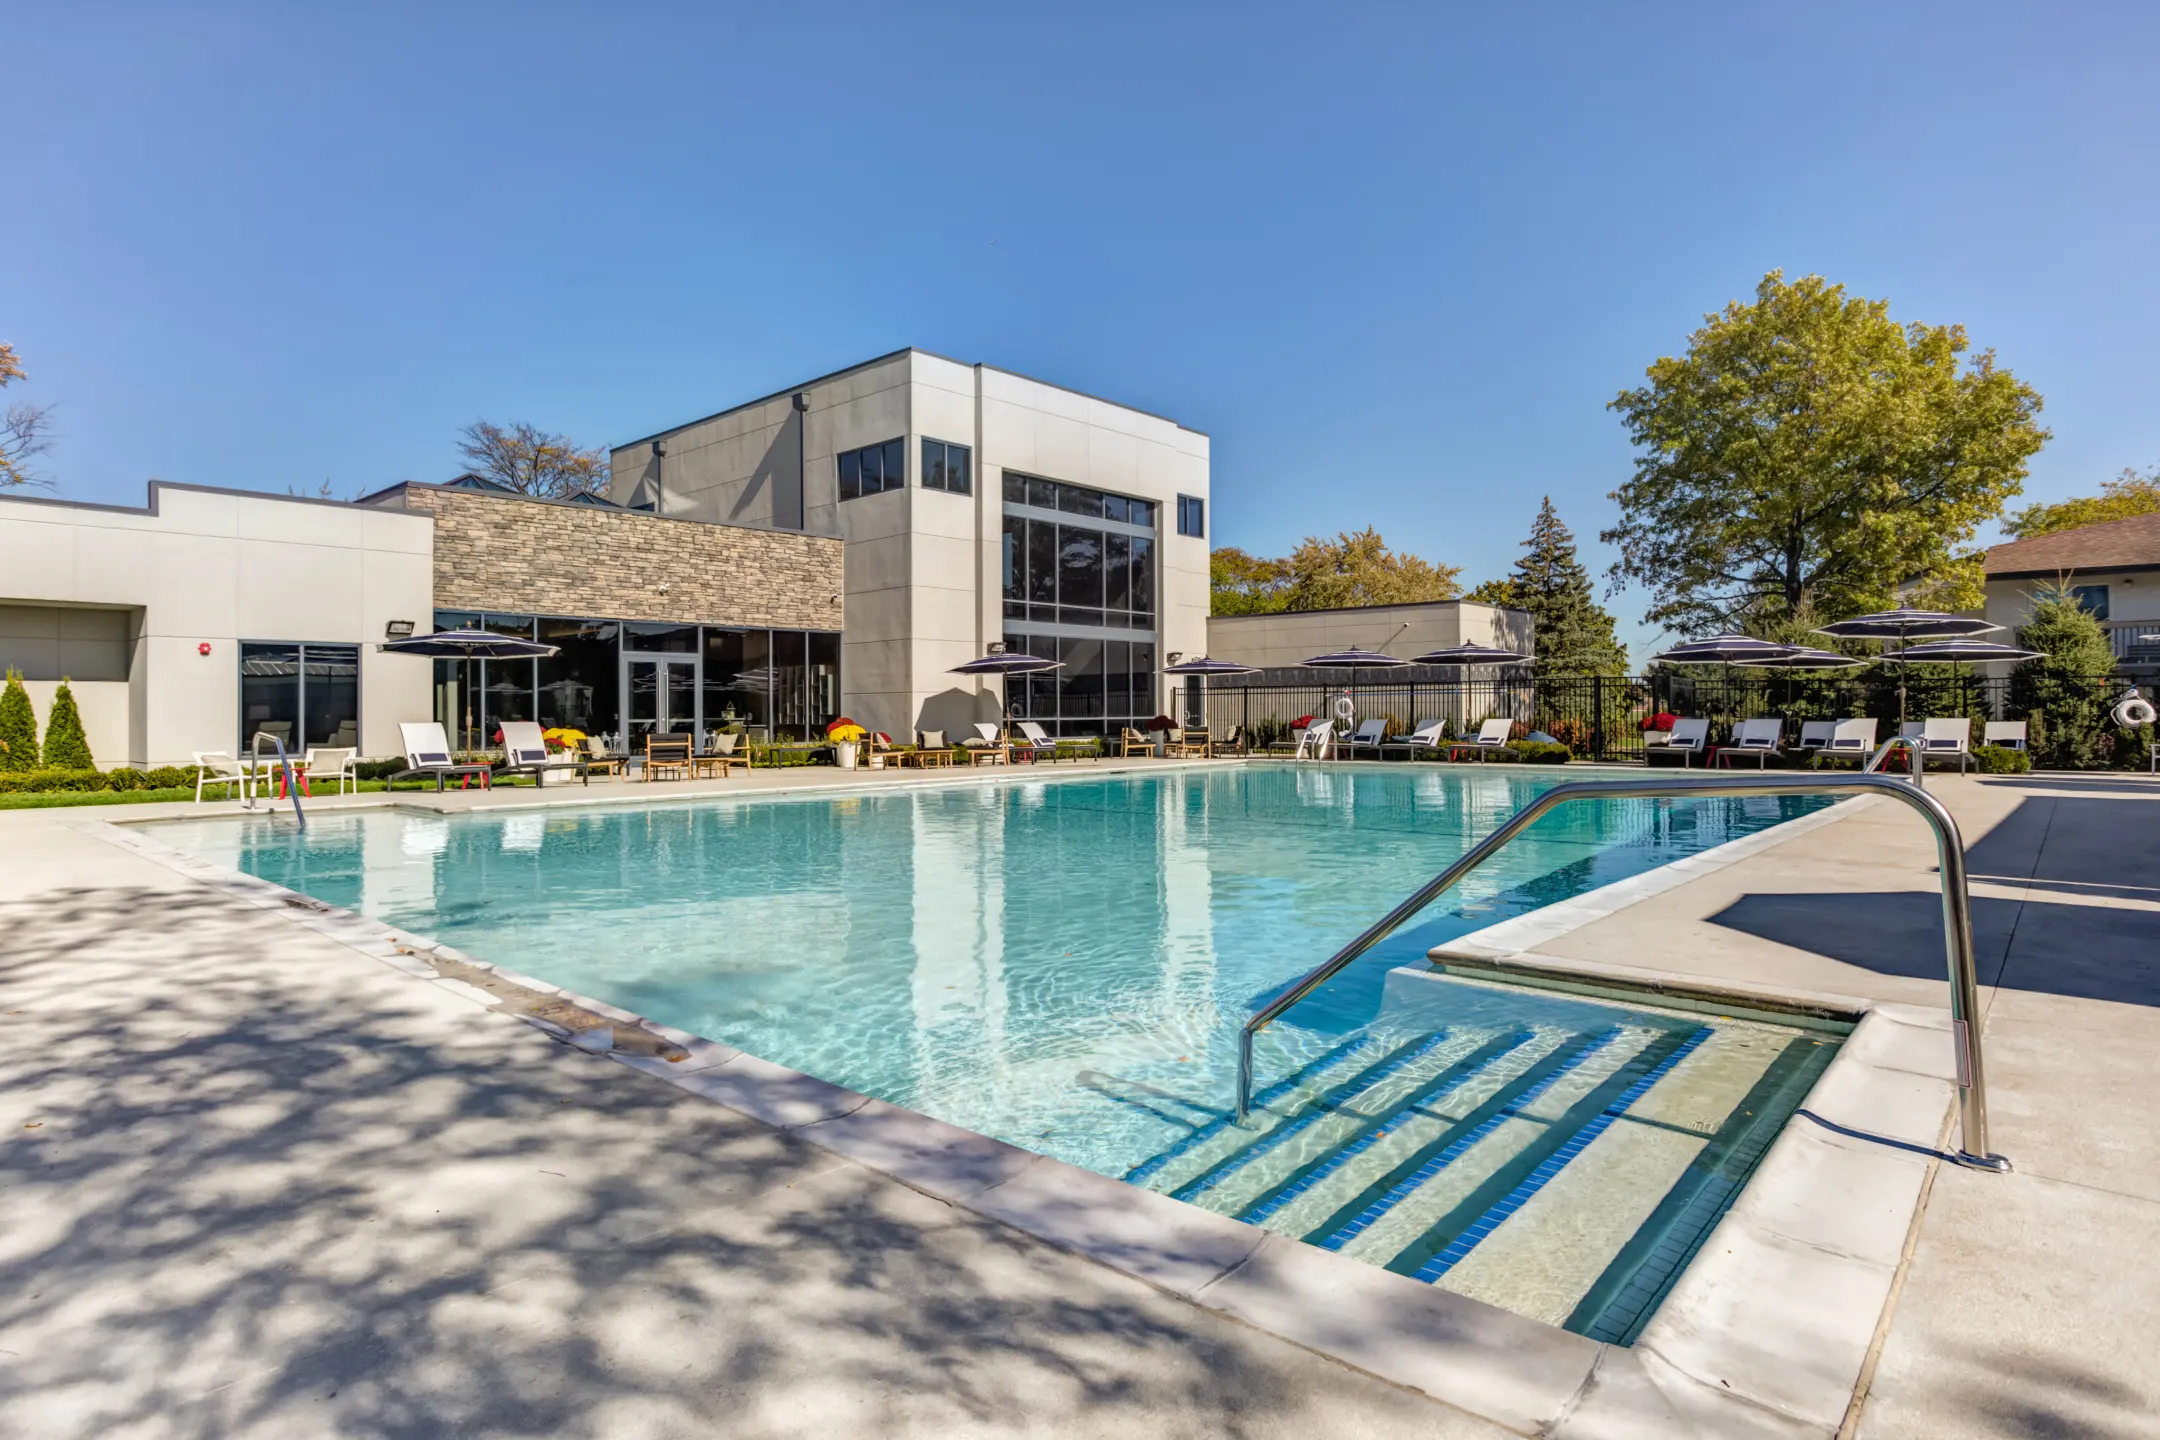 Pool - The Residence at Arlington Heights - Arlington Heights, IL